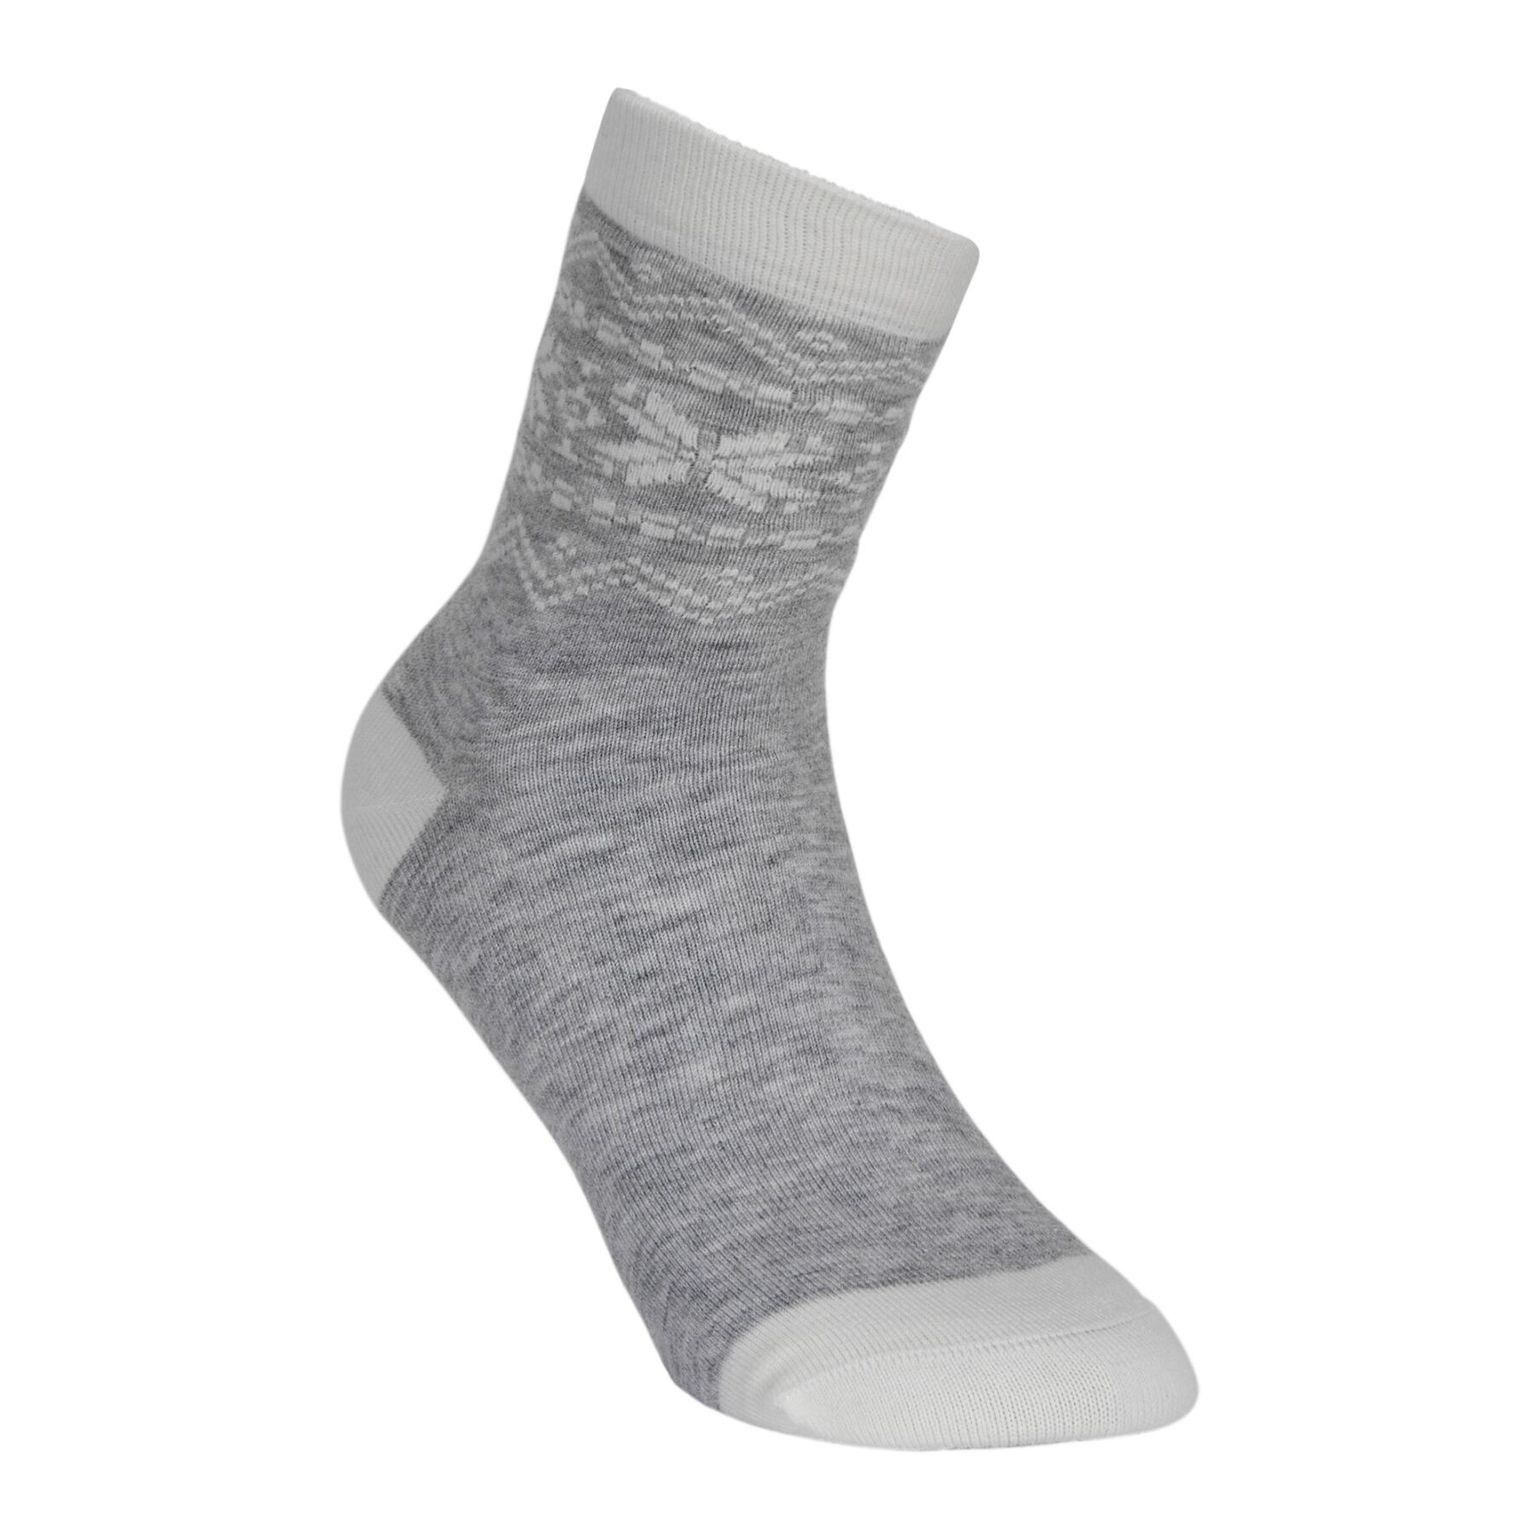 Gridarmor Heritage Merino Socks Lt. Grey/White